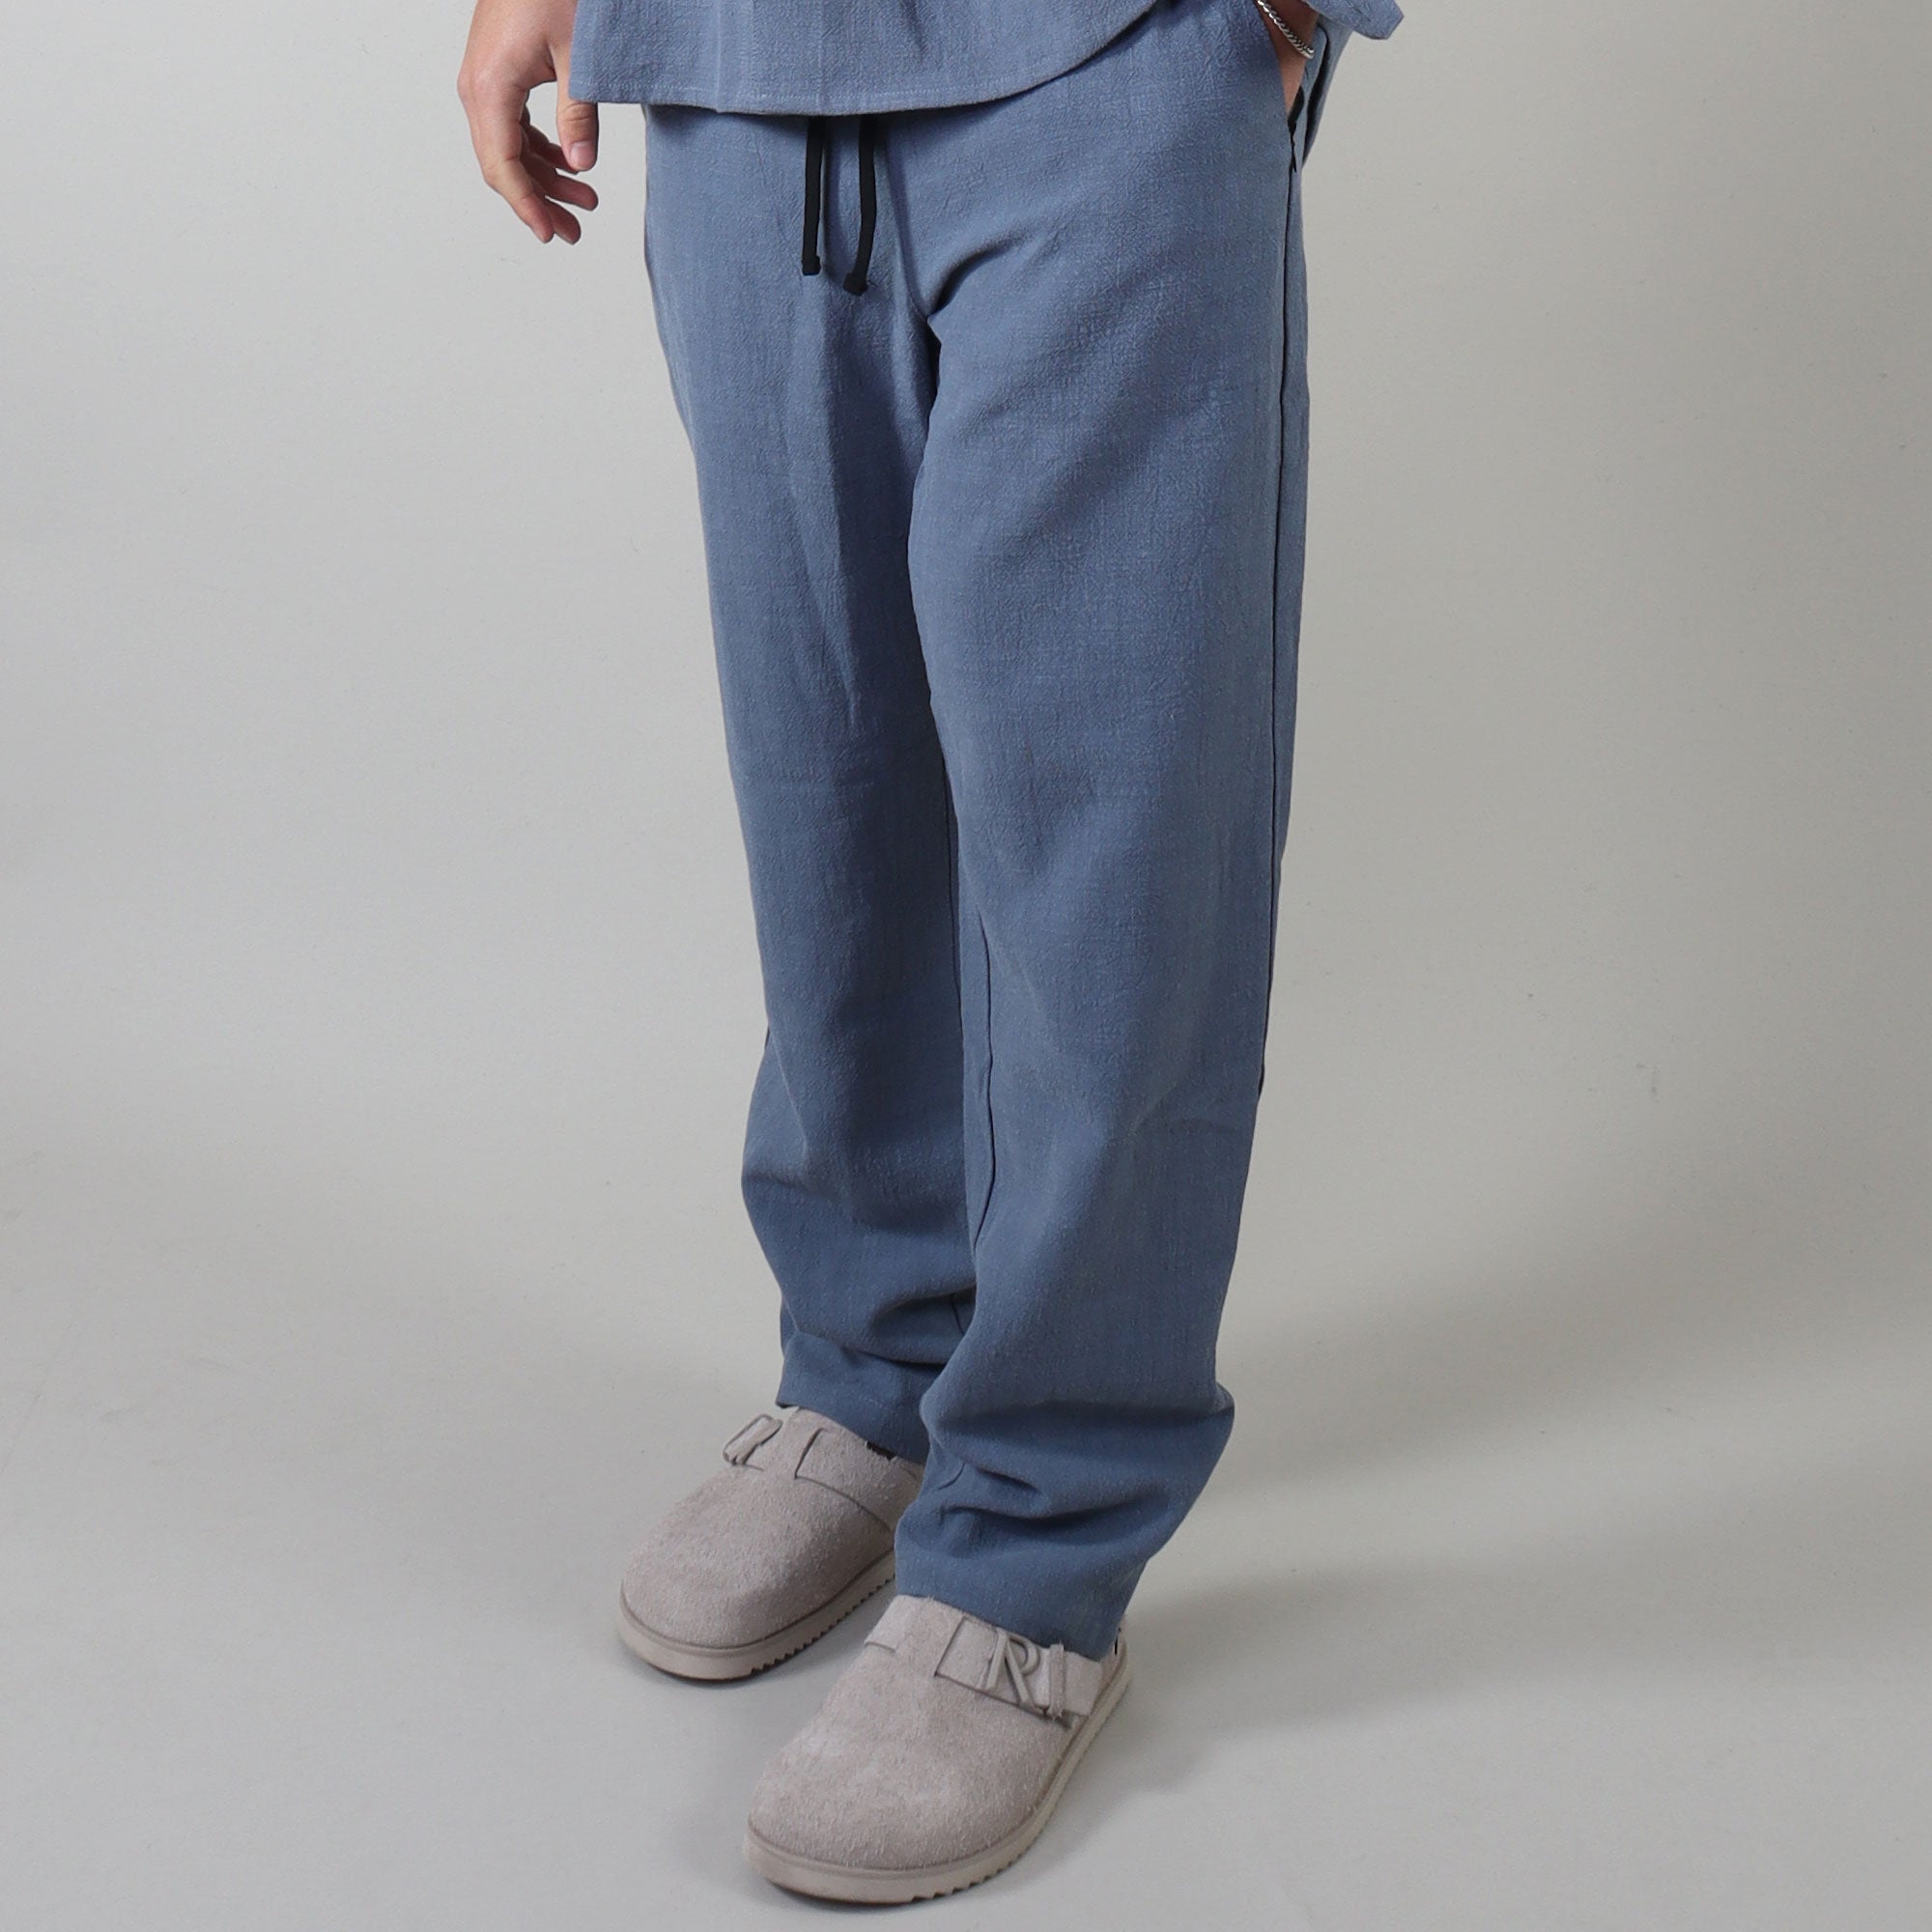 PRJCT pantalon lino light blue